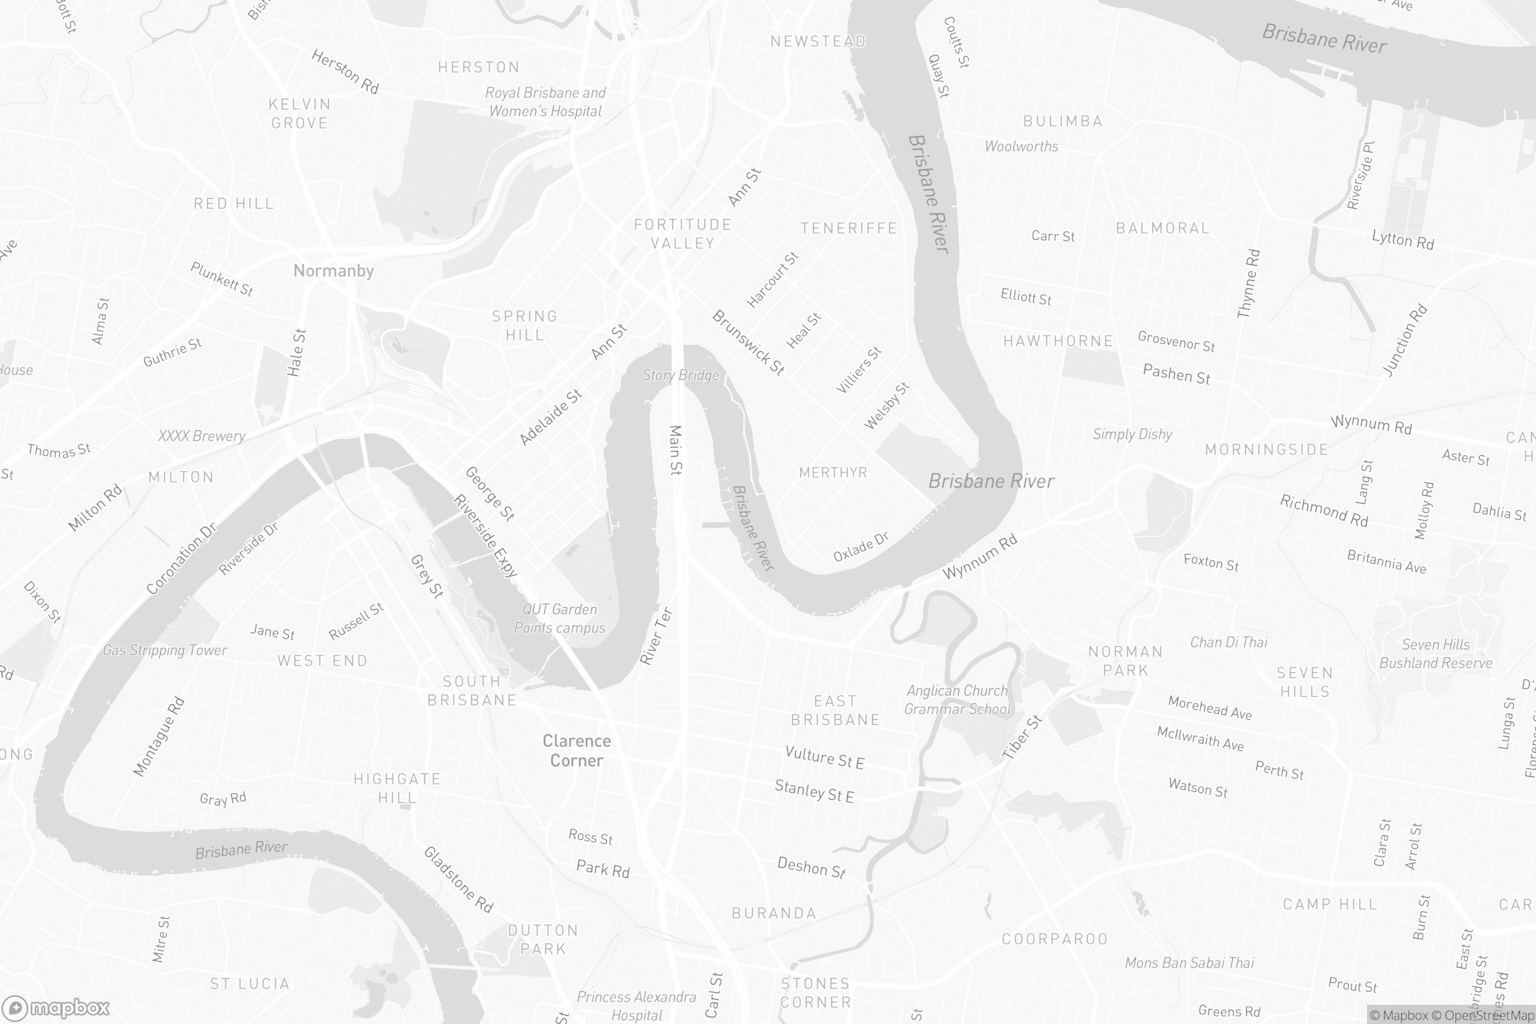 Map of Brisbane